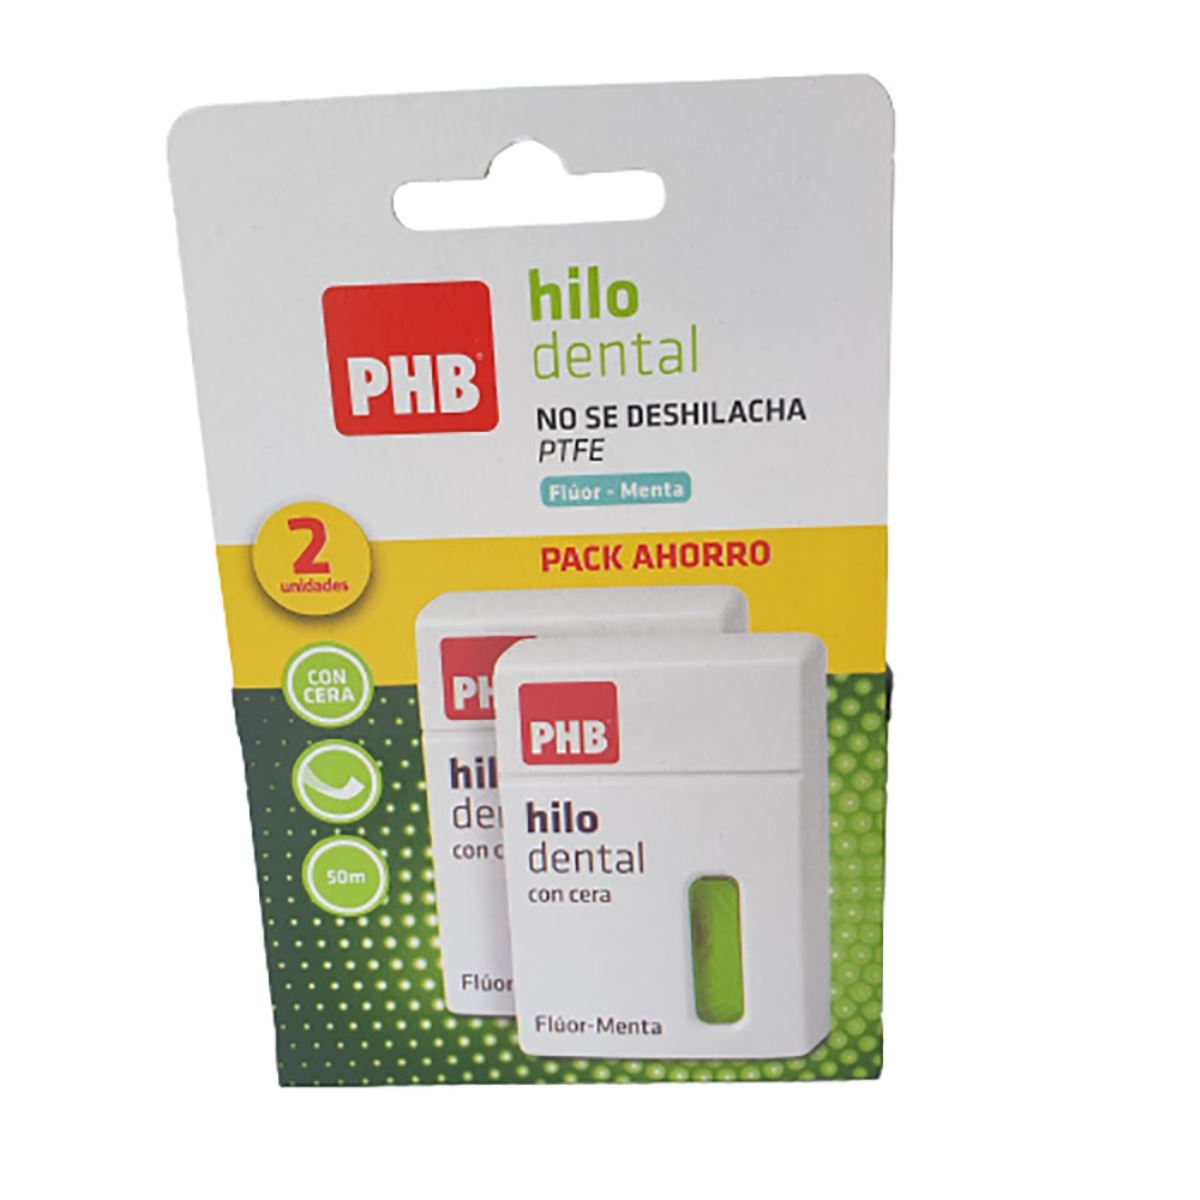 PHB Hilo Dental Con Cera Pack Ahorro